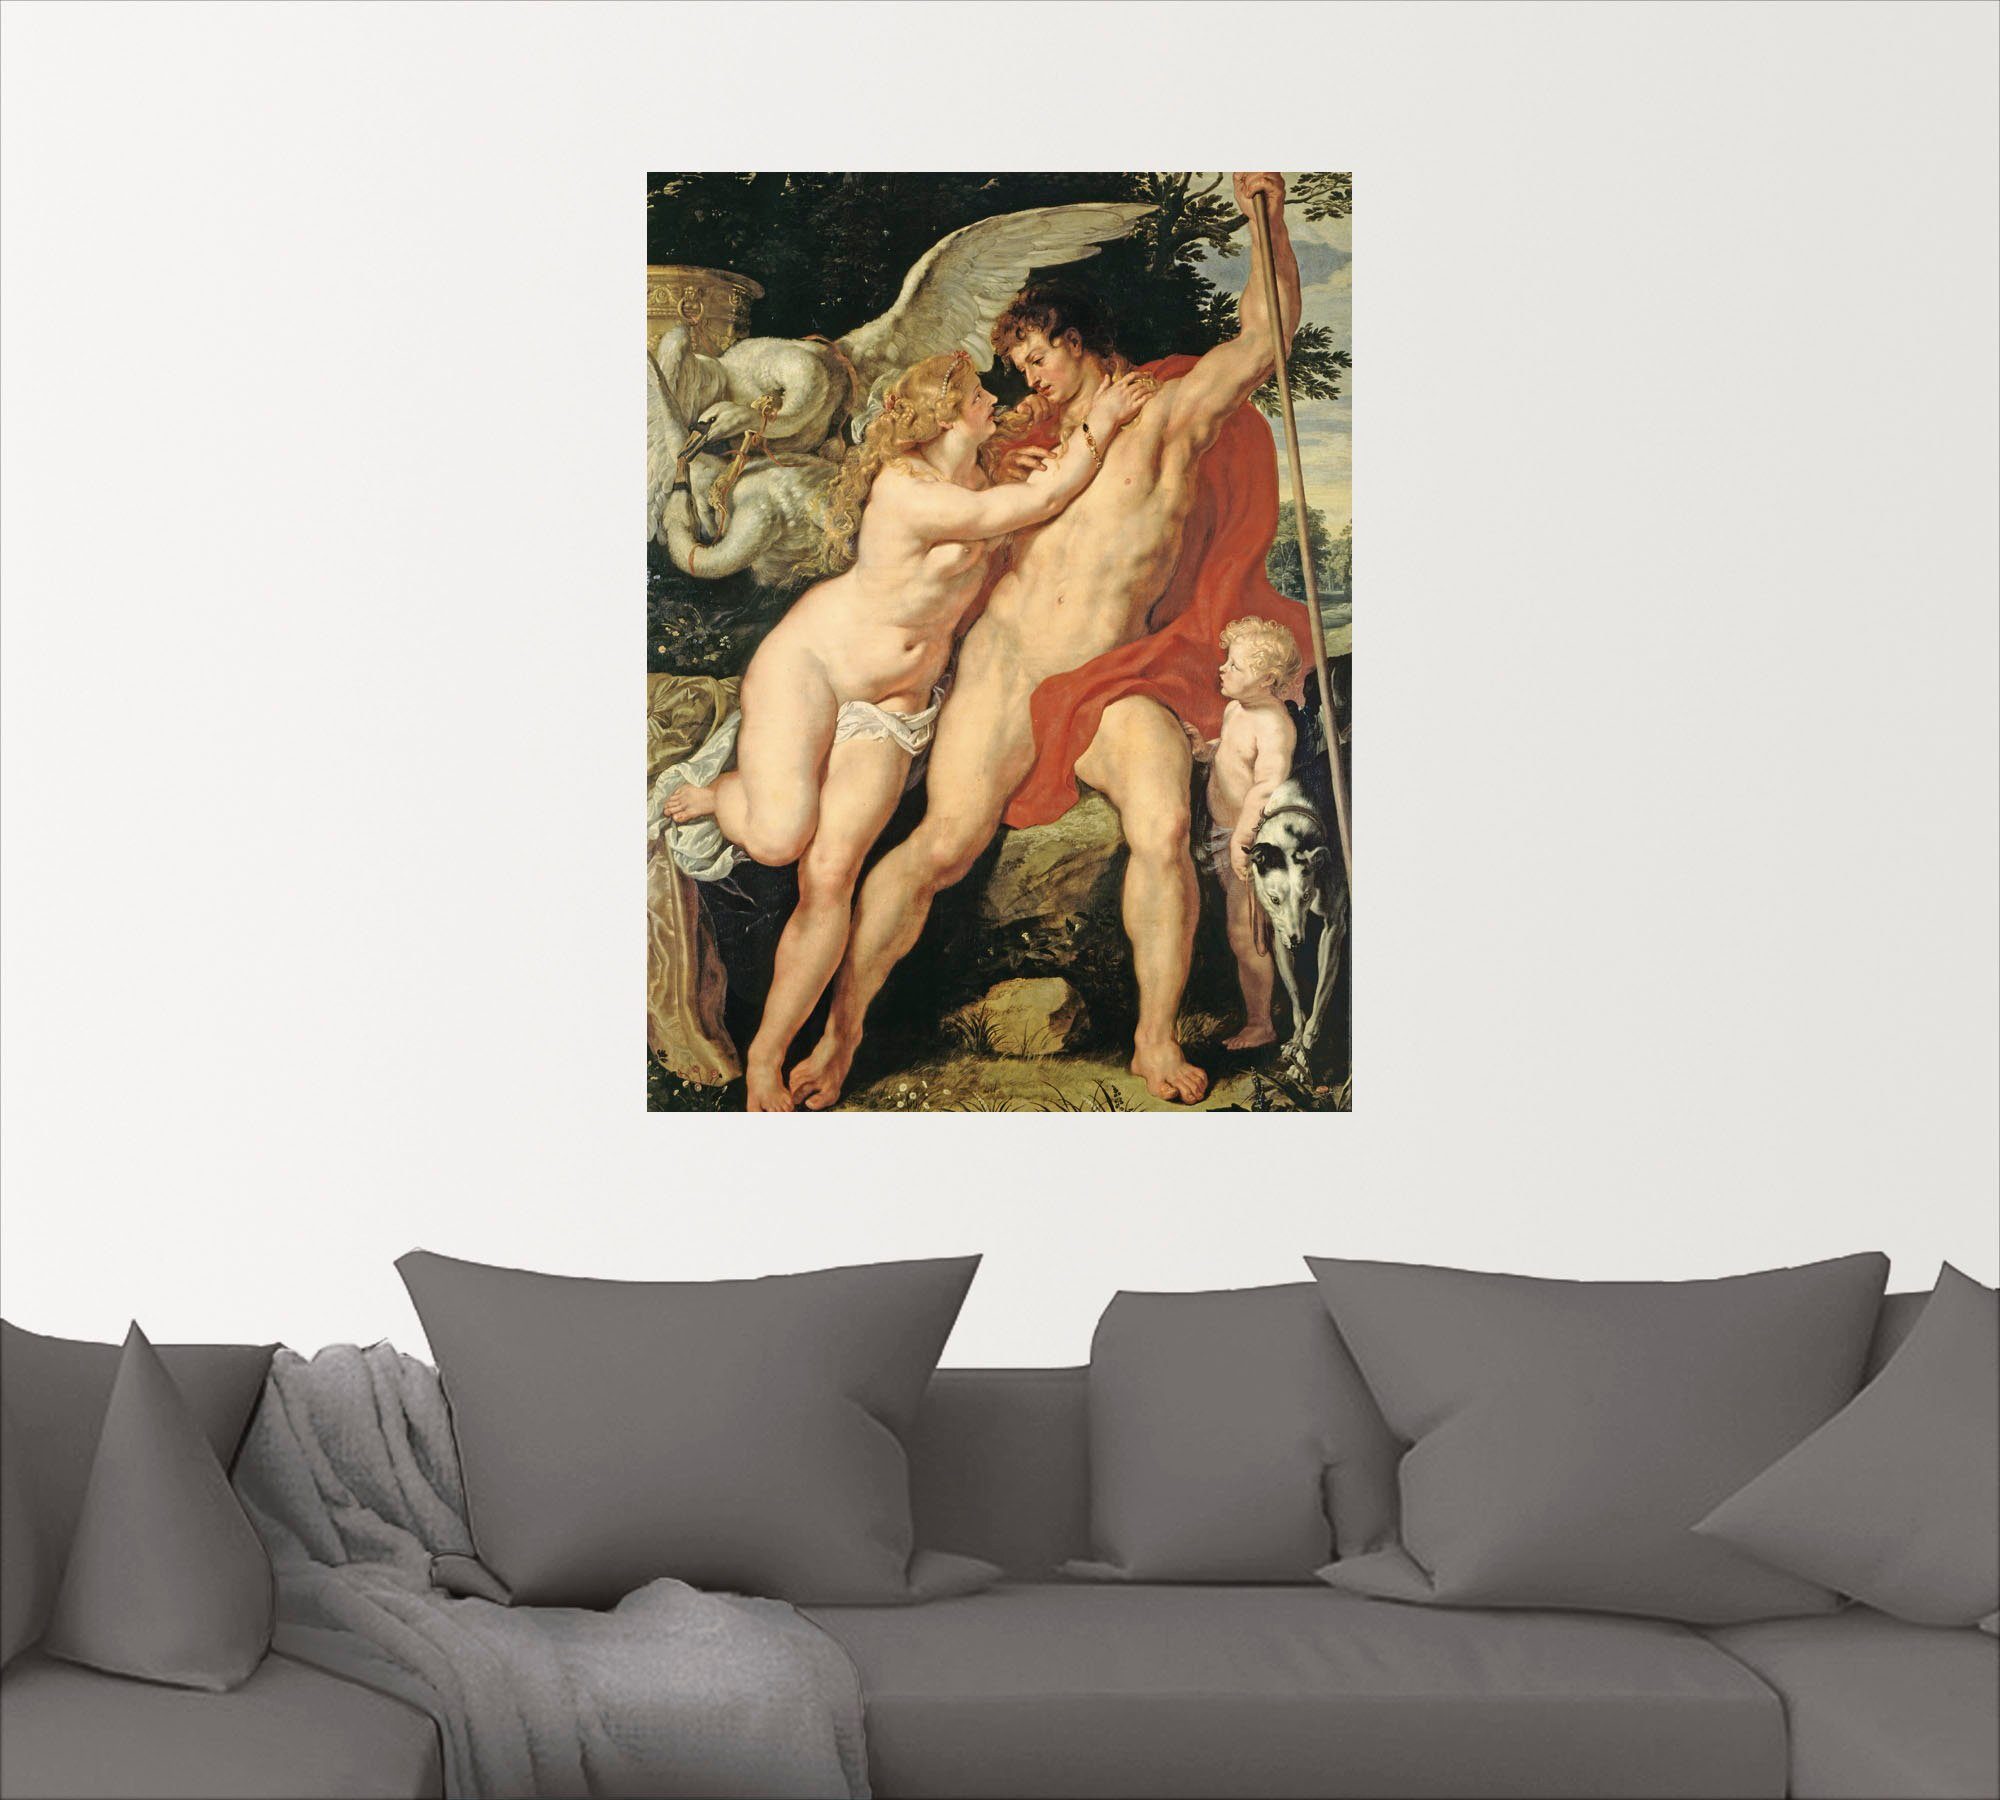 Adonis. in Wandbild 1610, Poster und St), Paar versch. Größen (1 oder Venus Leinwandbild, Um als Artland Wandaufkleber